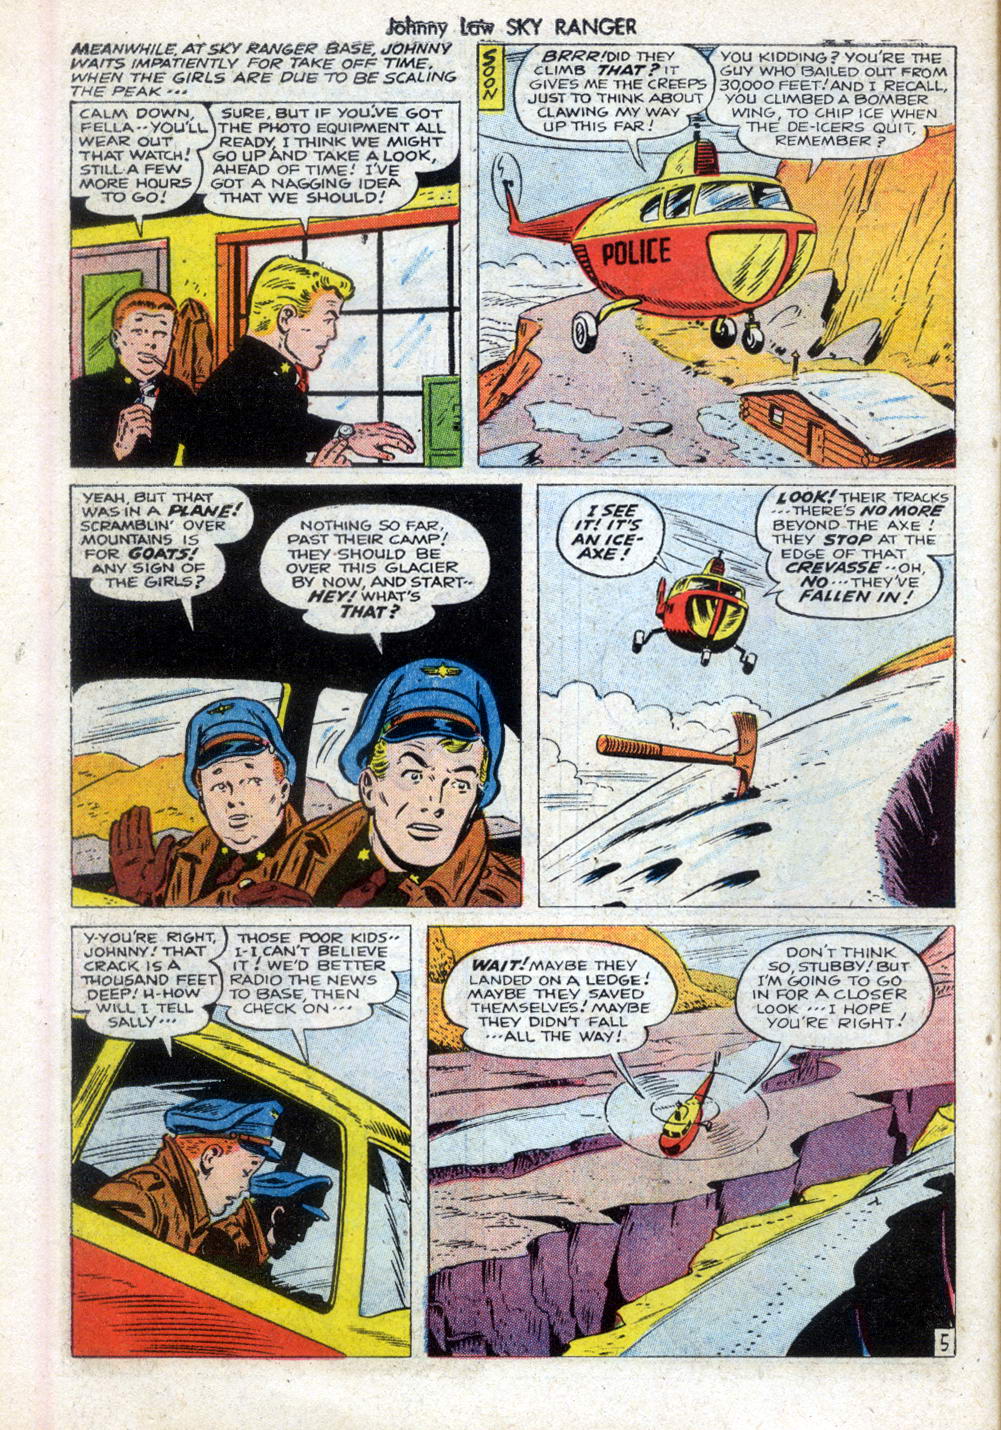 Read online Johnny Law Sky Ranger Adventures comic -  Issue #3 - 16